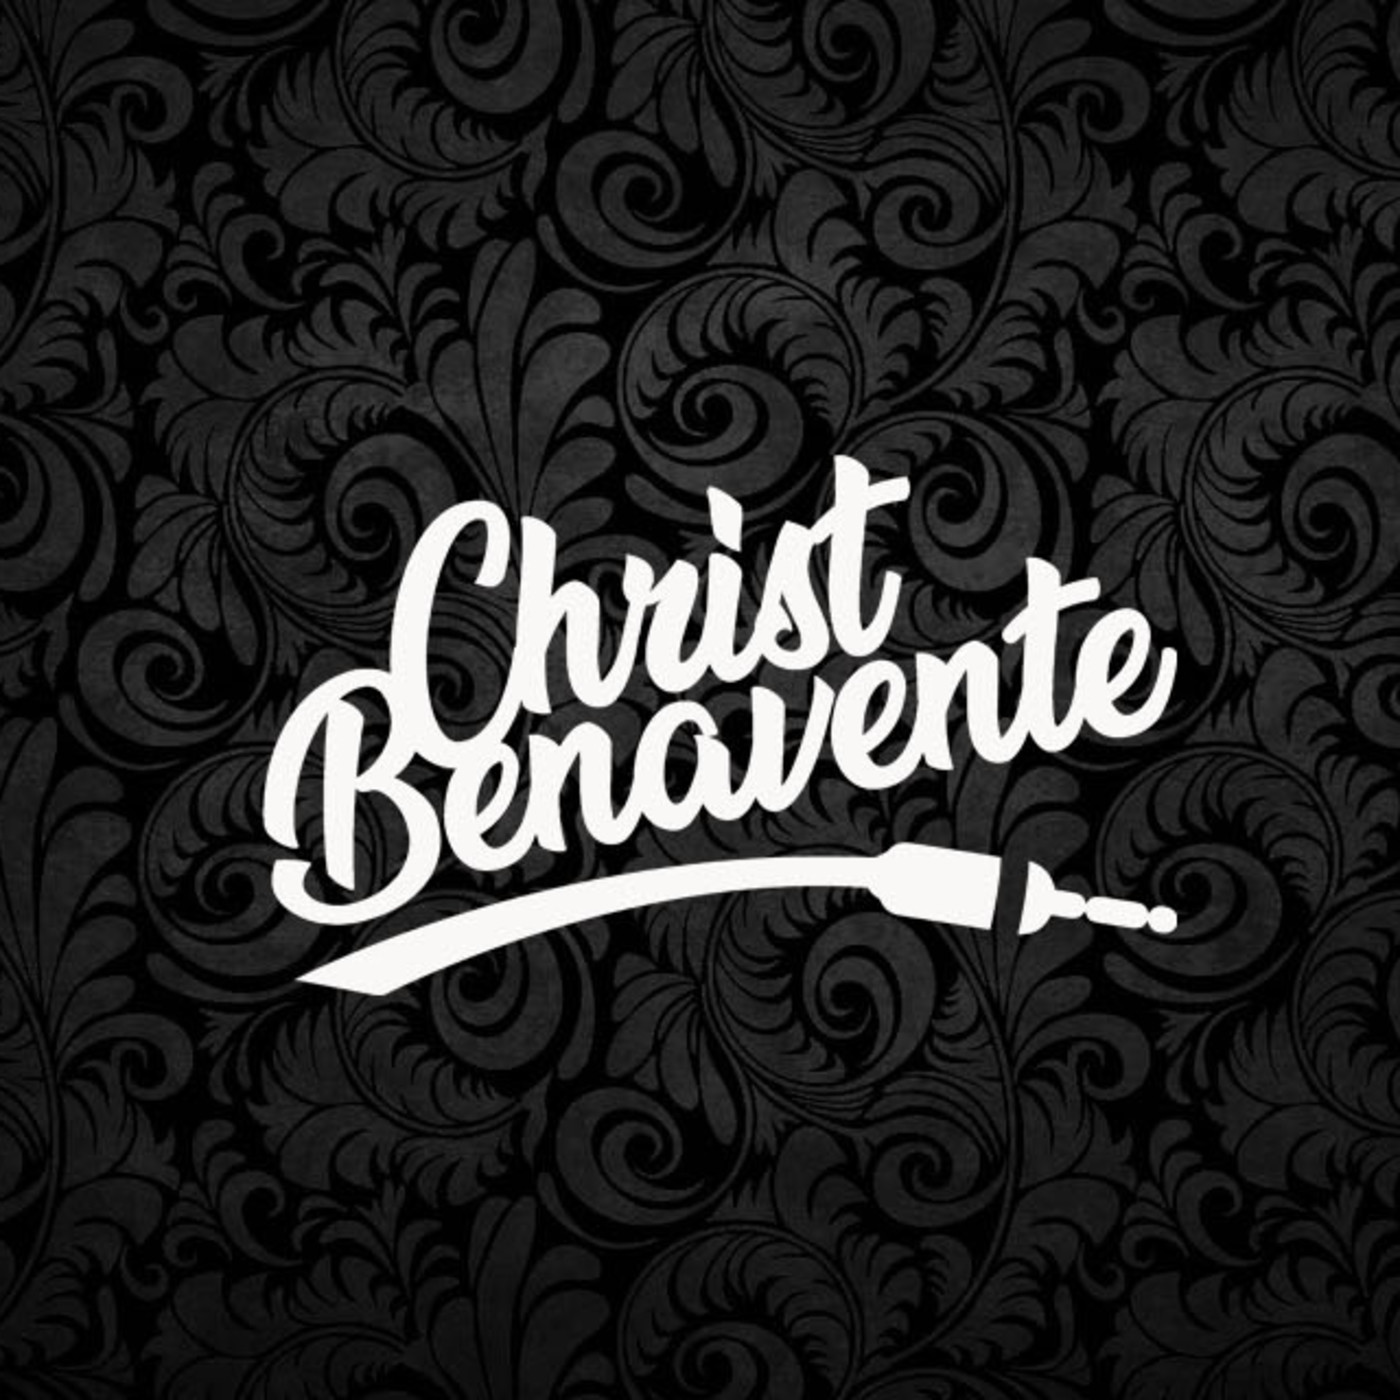 DJ CHRIST BENAVENTE